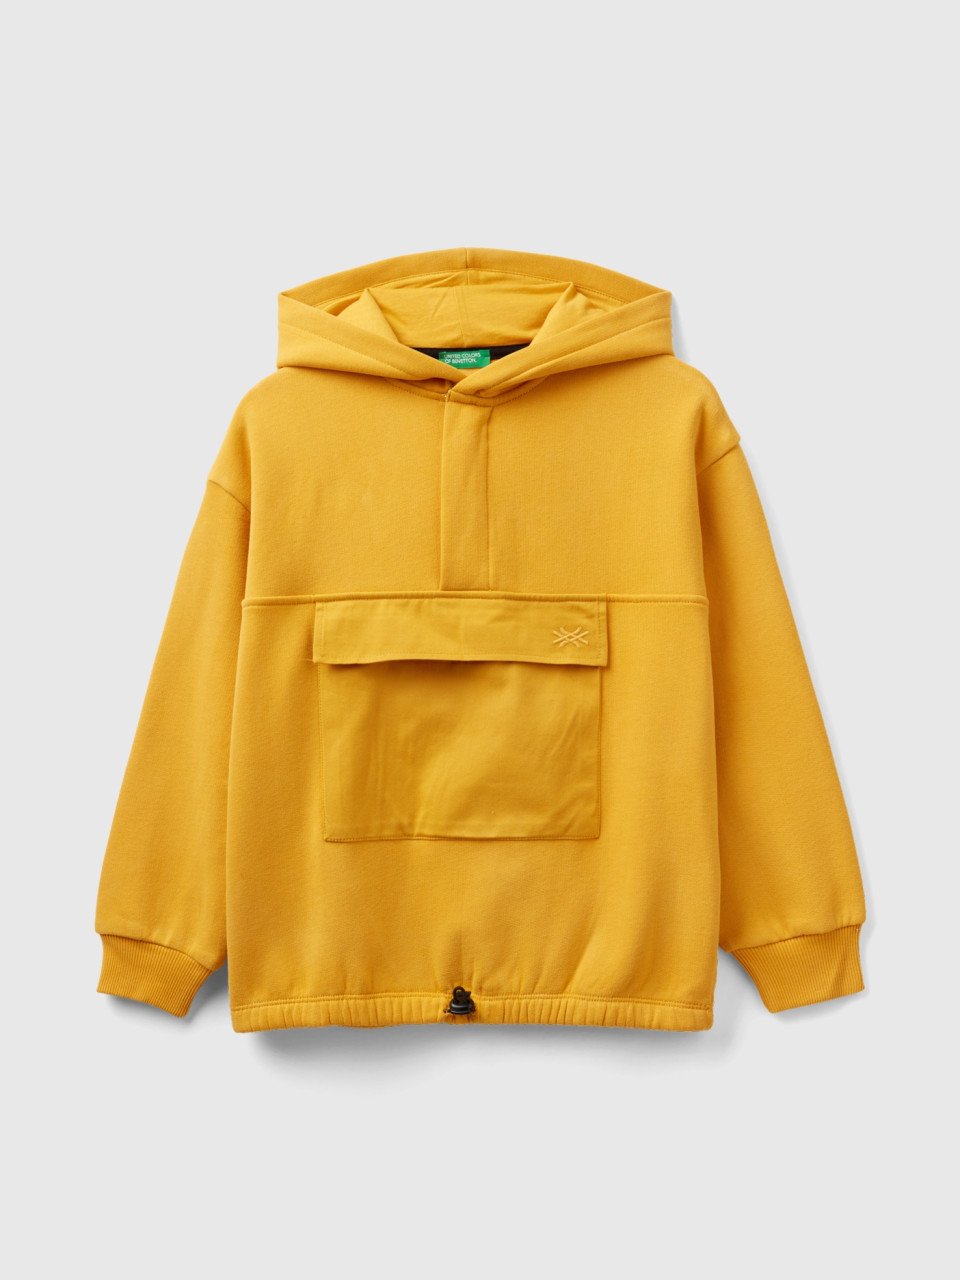 Benetton, Warm Hoodie With Pocket, Yellow, Kids